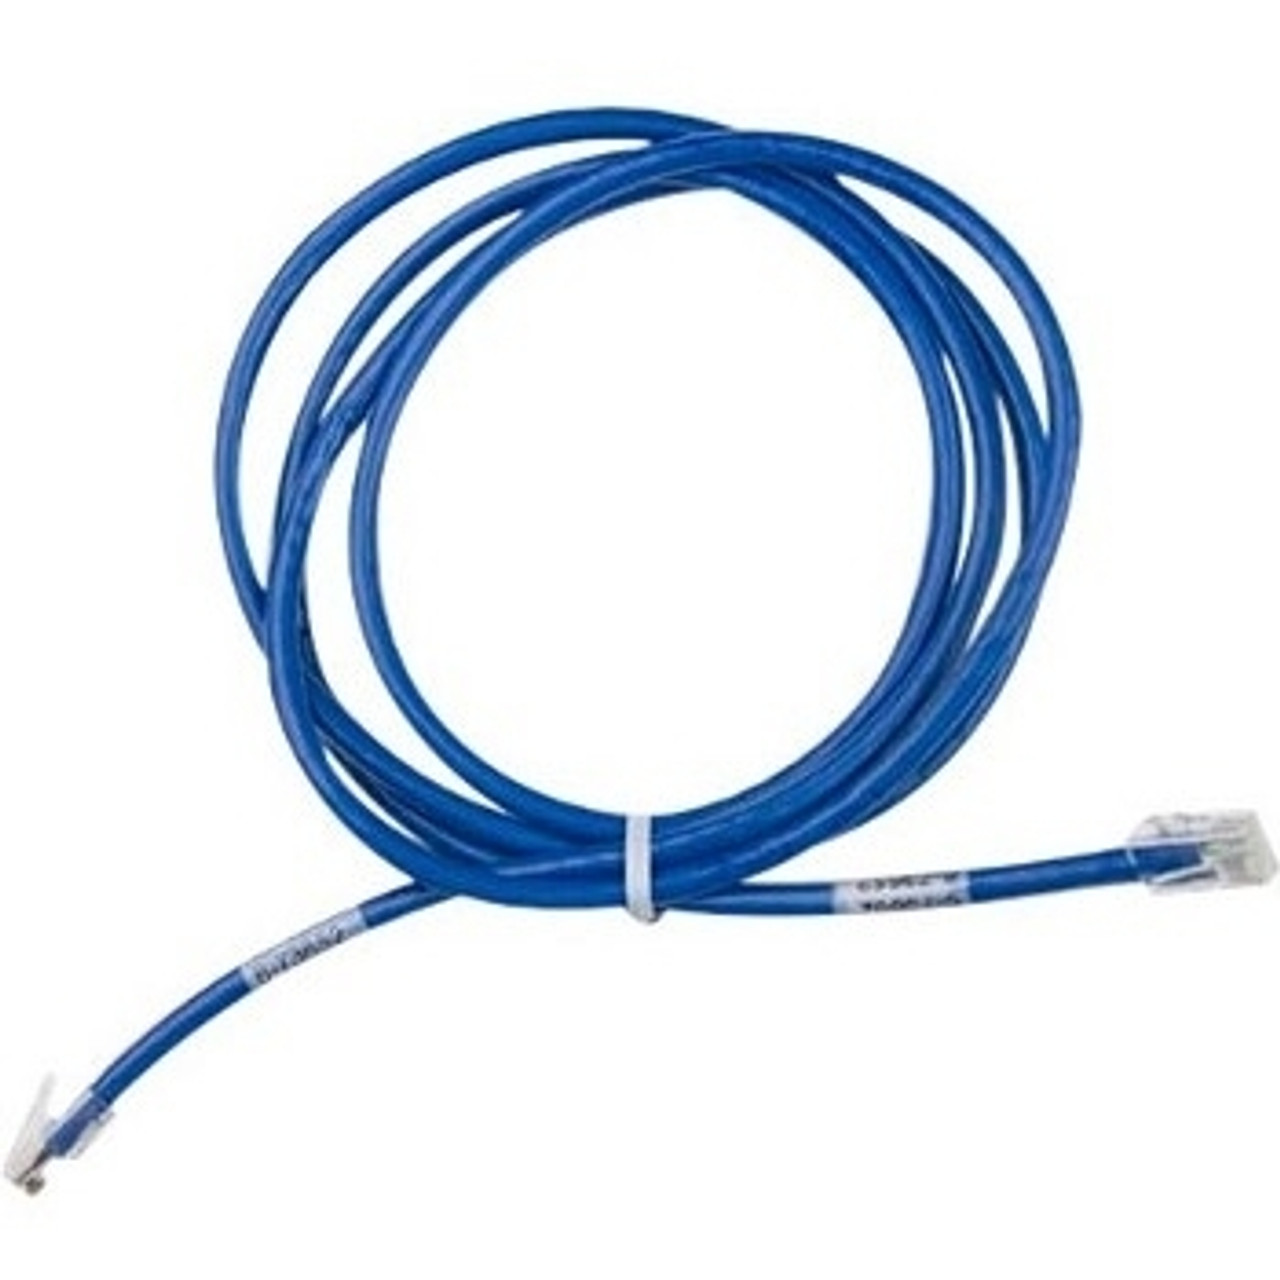 CBL-NTWK-0599 Supermicro Cat.6 UTP Network Cable